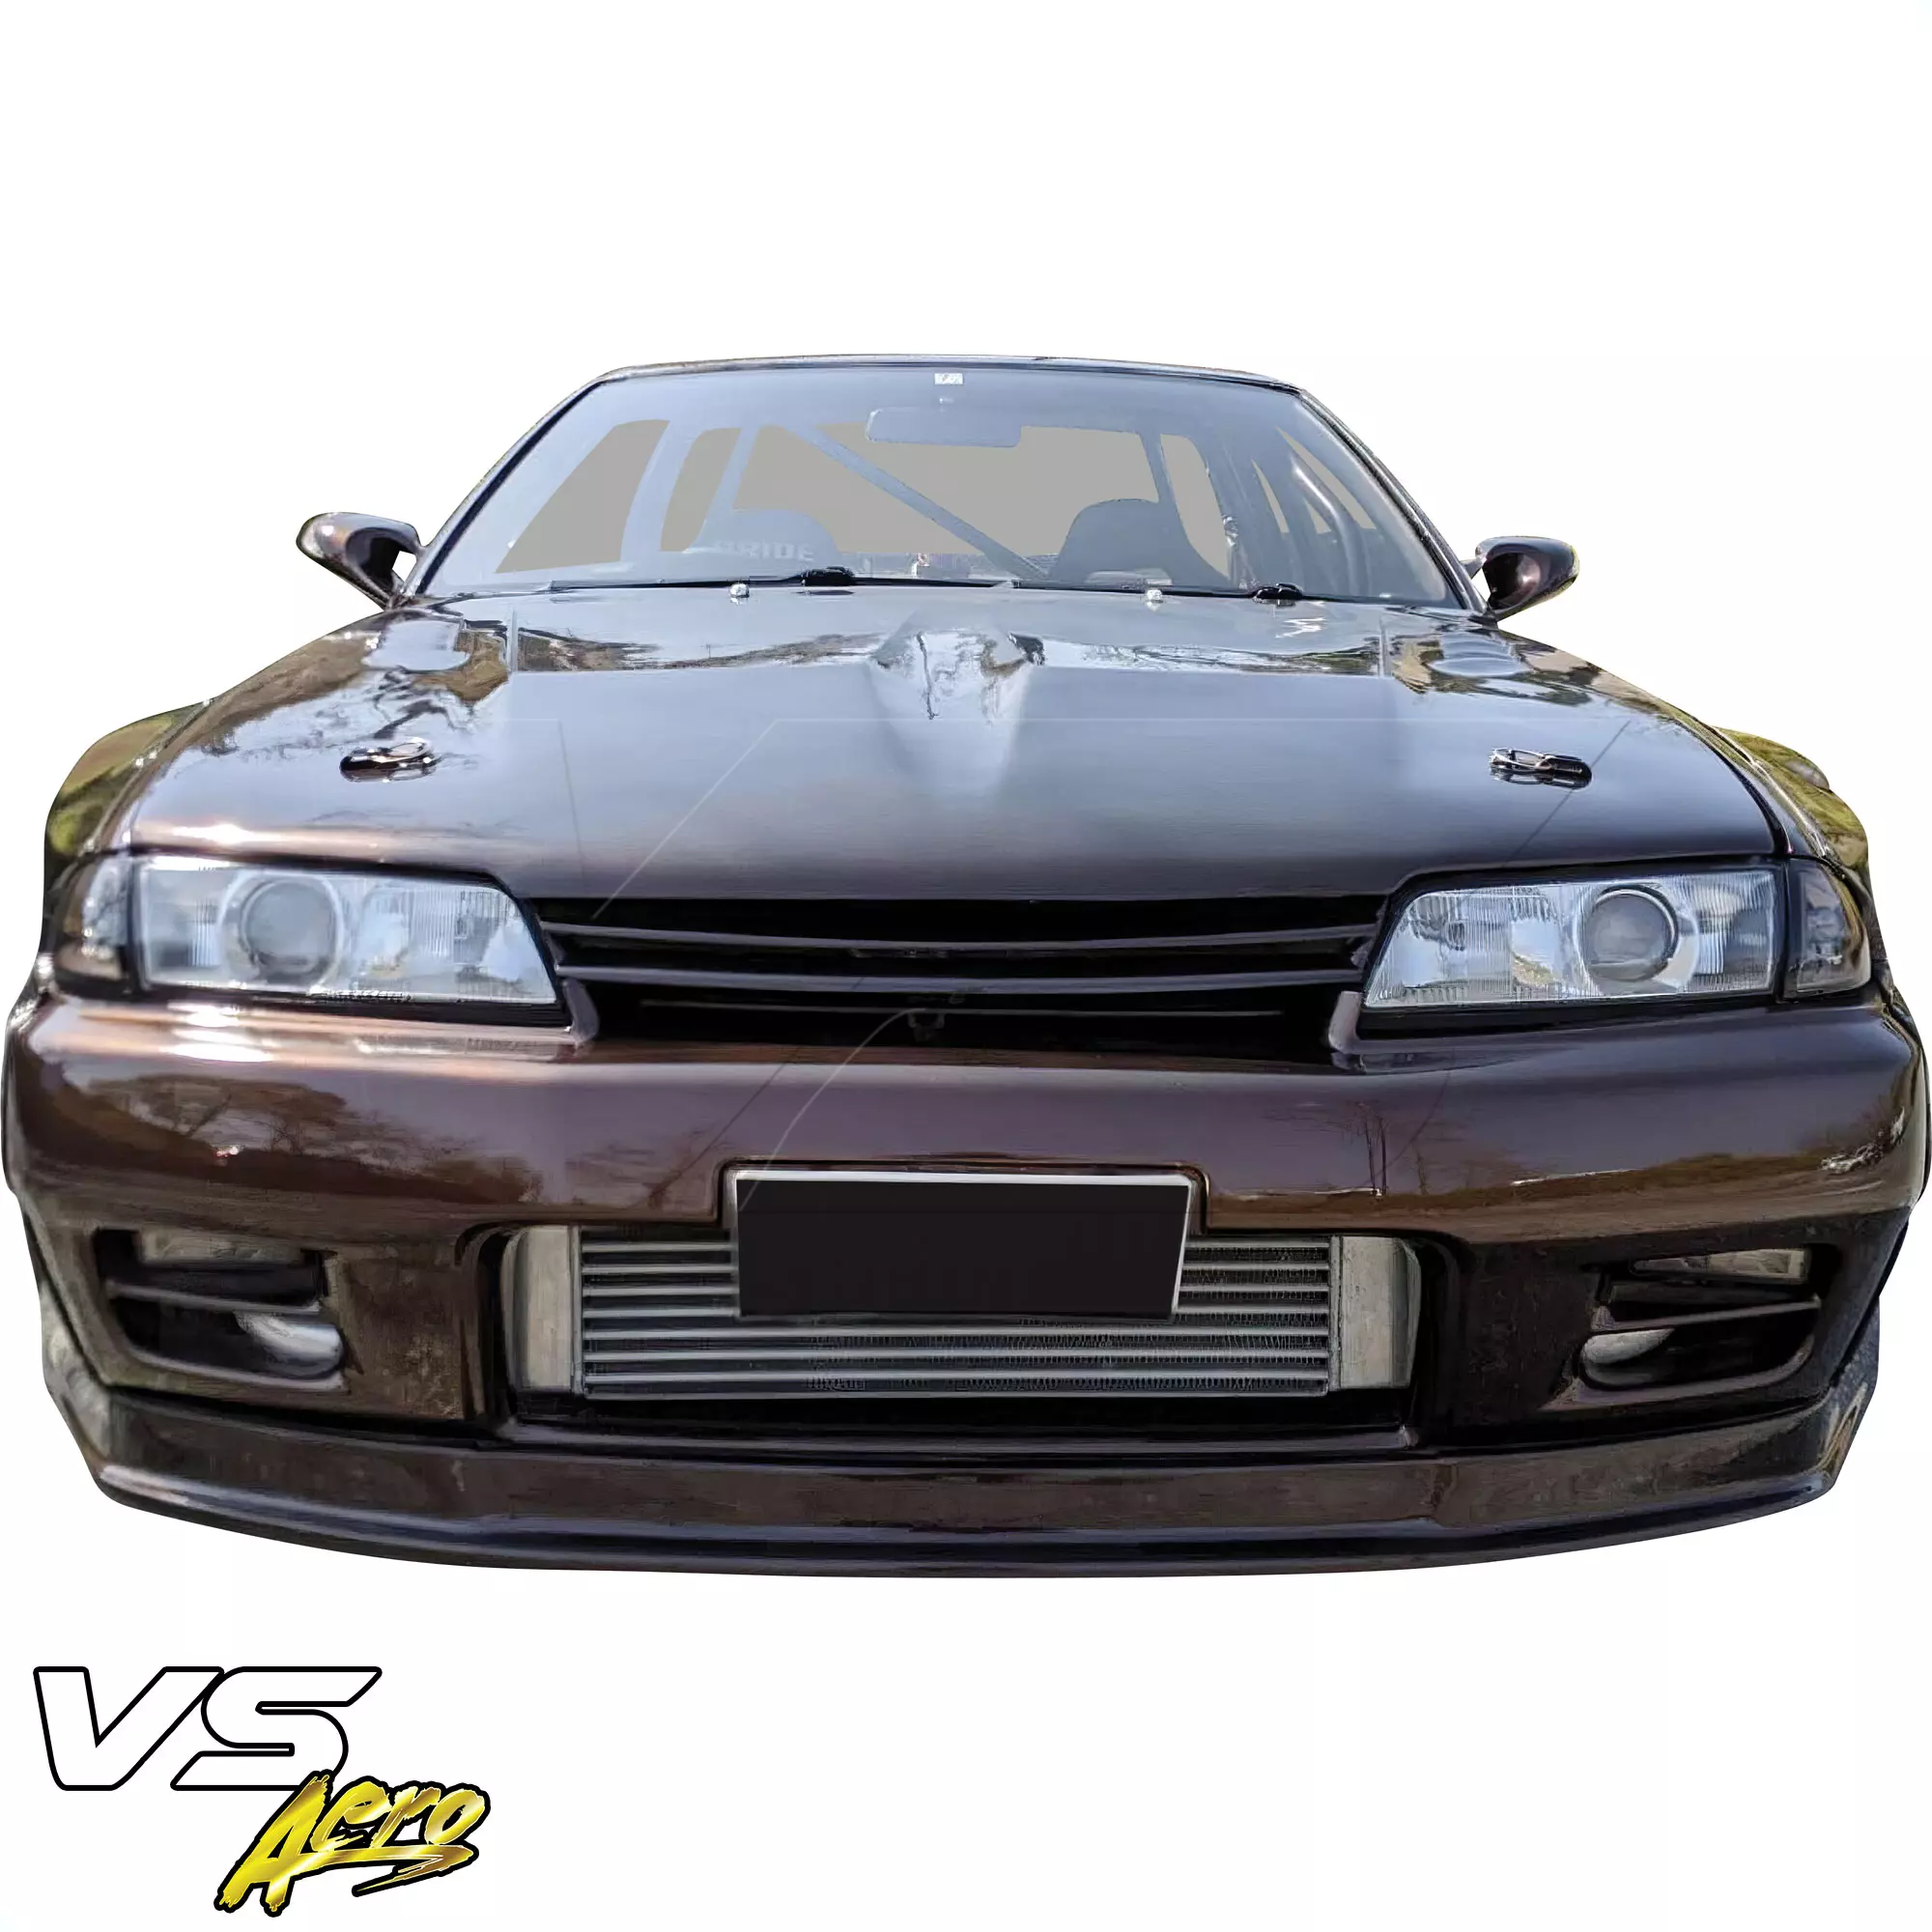 VSaero FRP TKYO Wide Body Kit > Nissan Skyline R32 1990-1994 > 2dr Coupe - Image 34